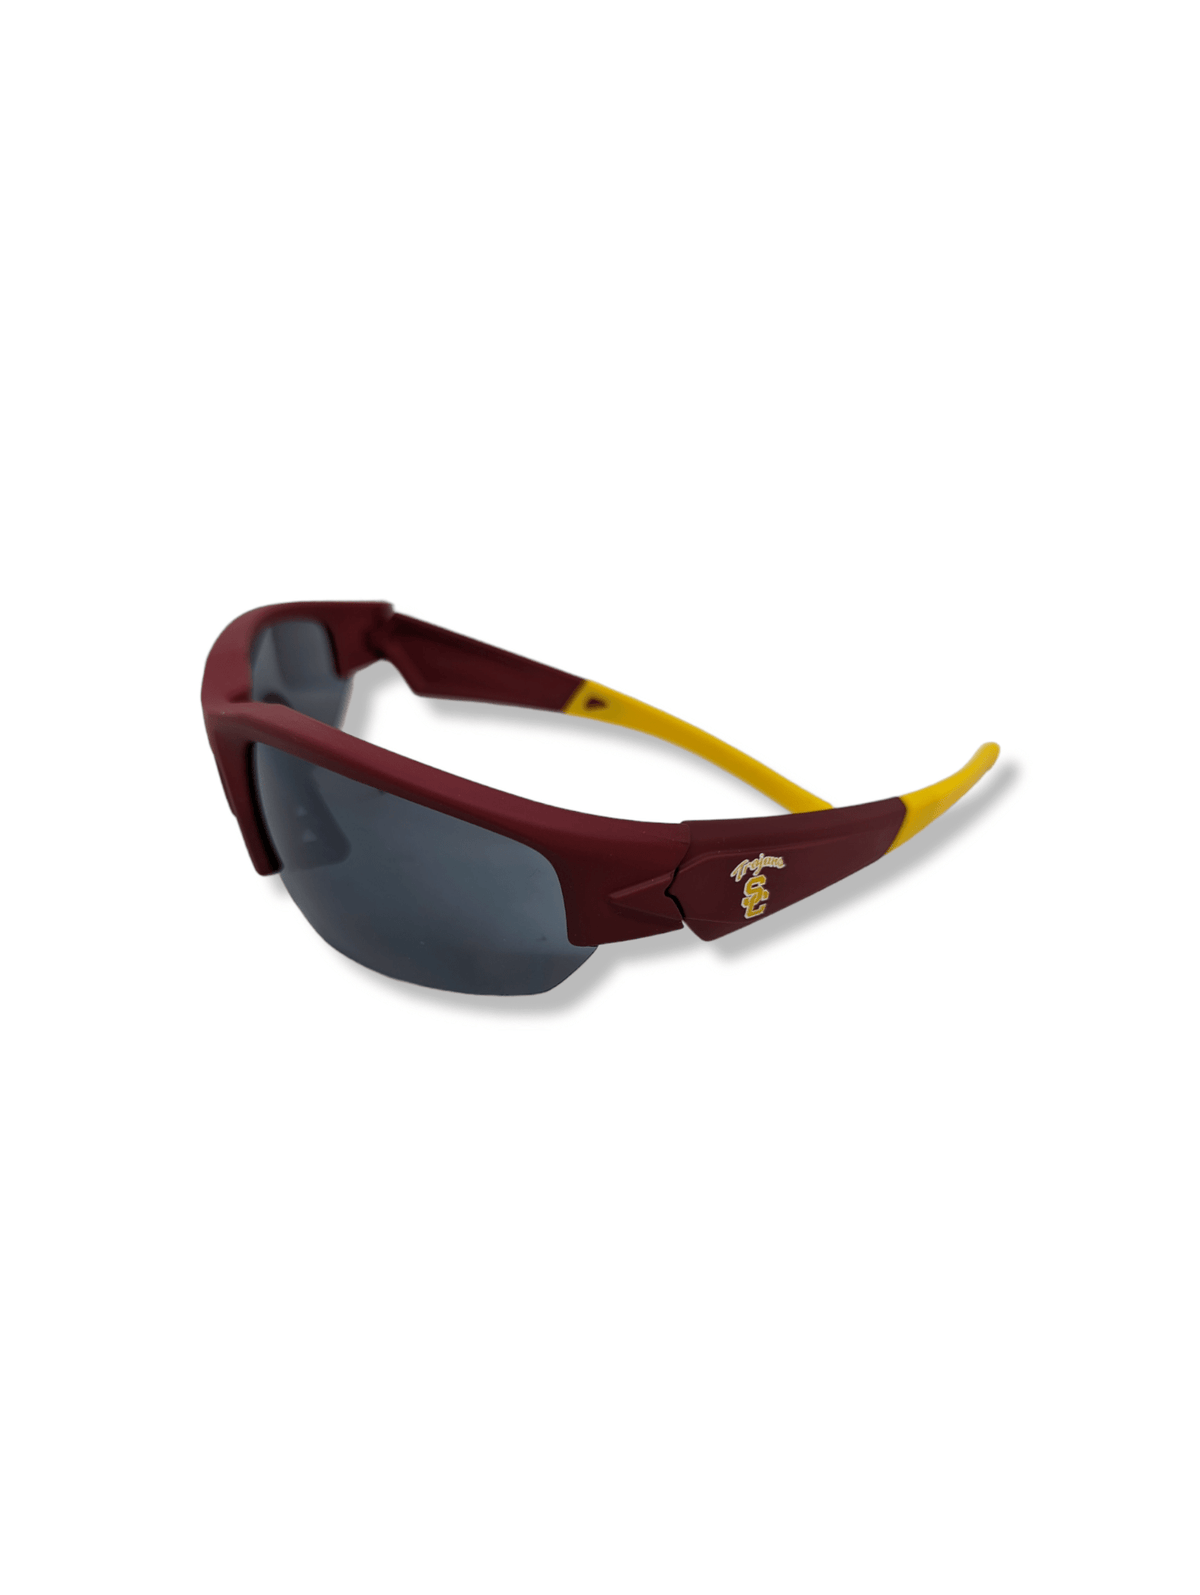 On The Mark Sunglasses USC Sunglasses University of Sothern California Sunglasses. USC Golf Shades 